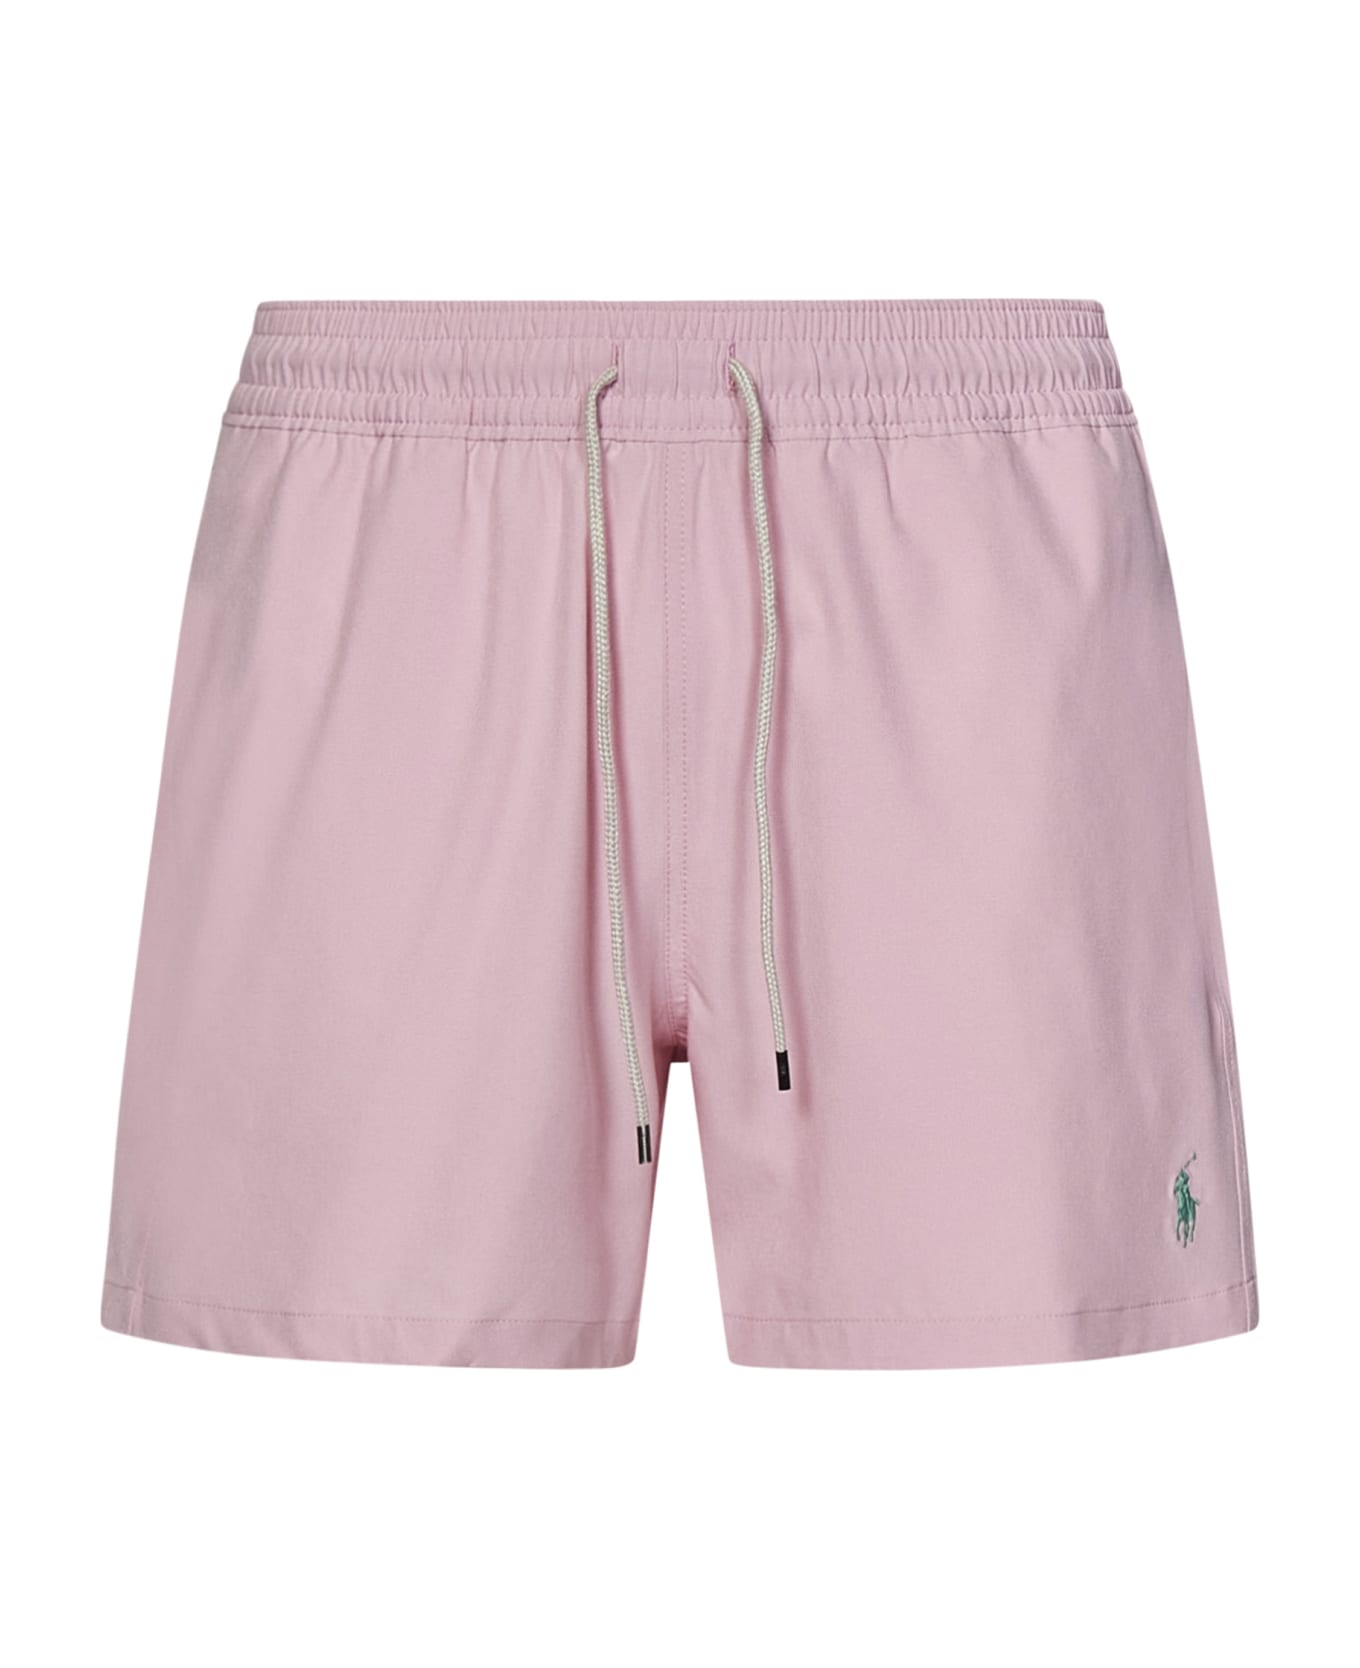 Polo Ralph Lauren Traveler Swimsuit - Pink